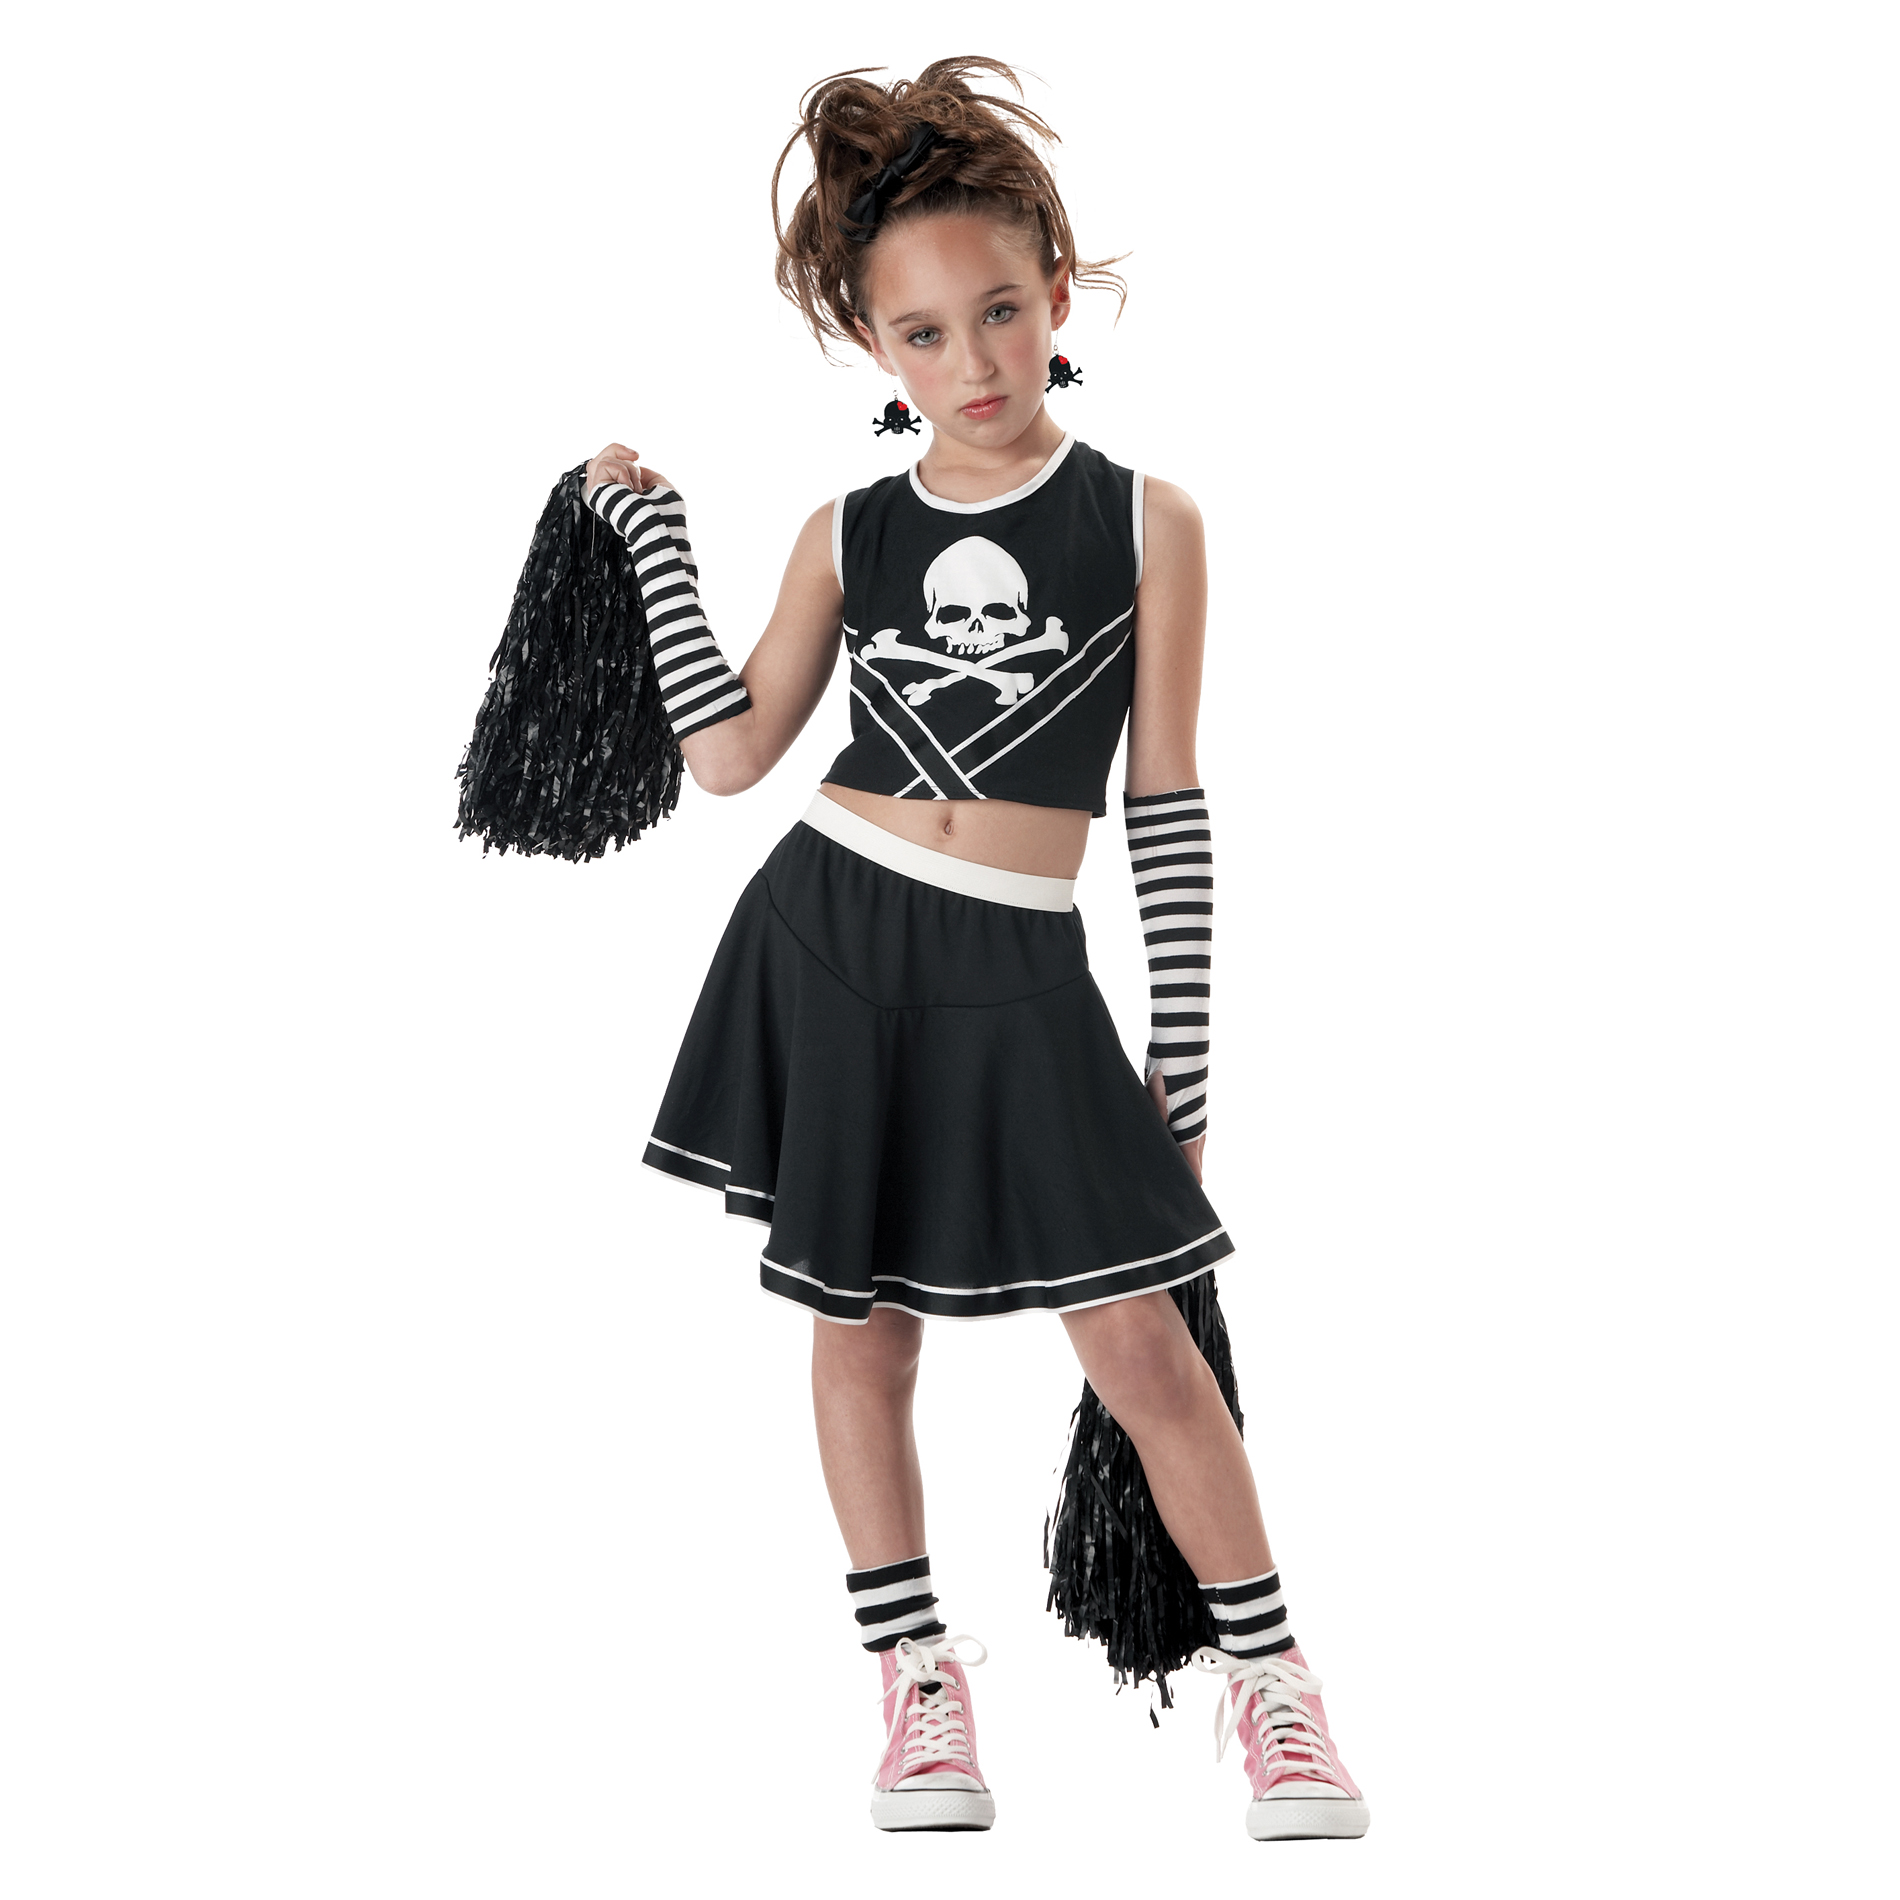 Totally Ghoul Punk Cheerleader Halloween Costume